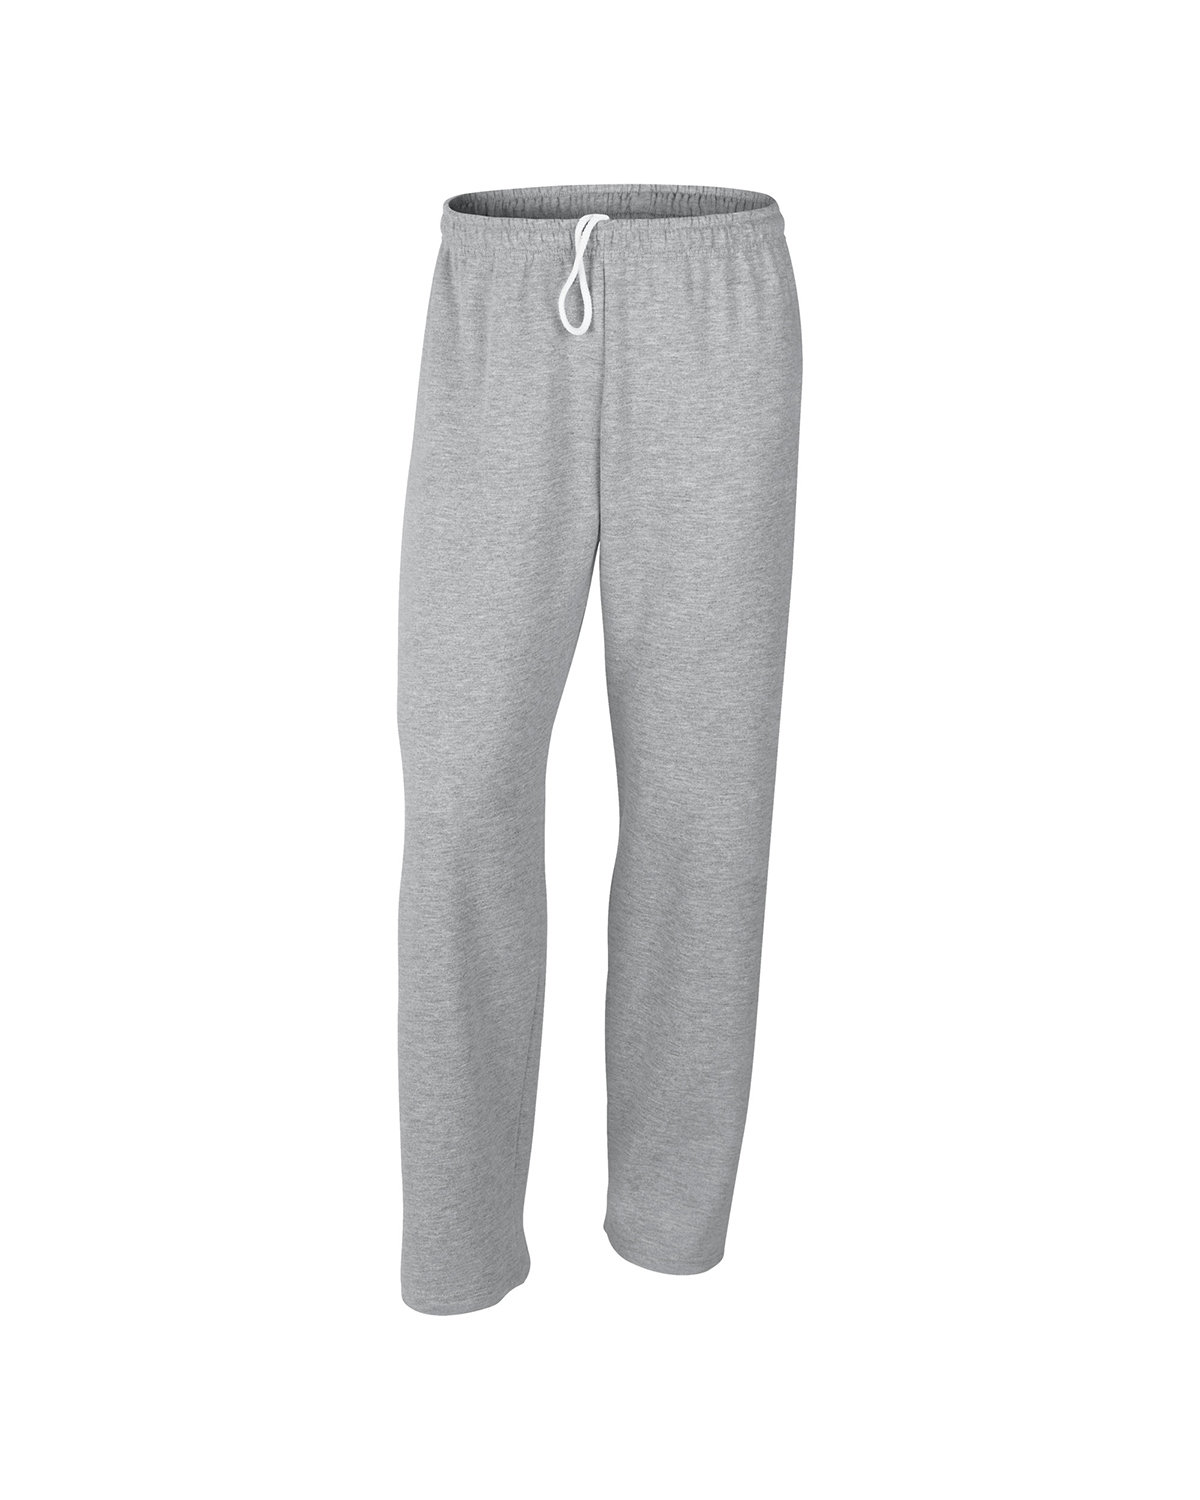 Heavy Blend 8 oz. 50/50 Open-Bottom Sweatpants (G184) Grey, S